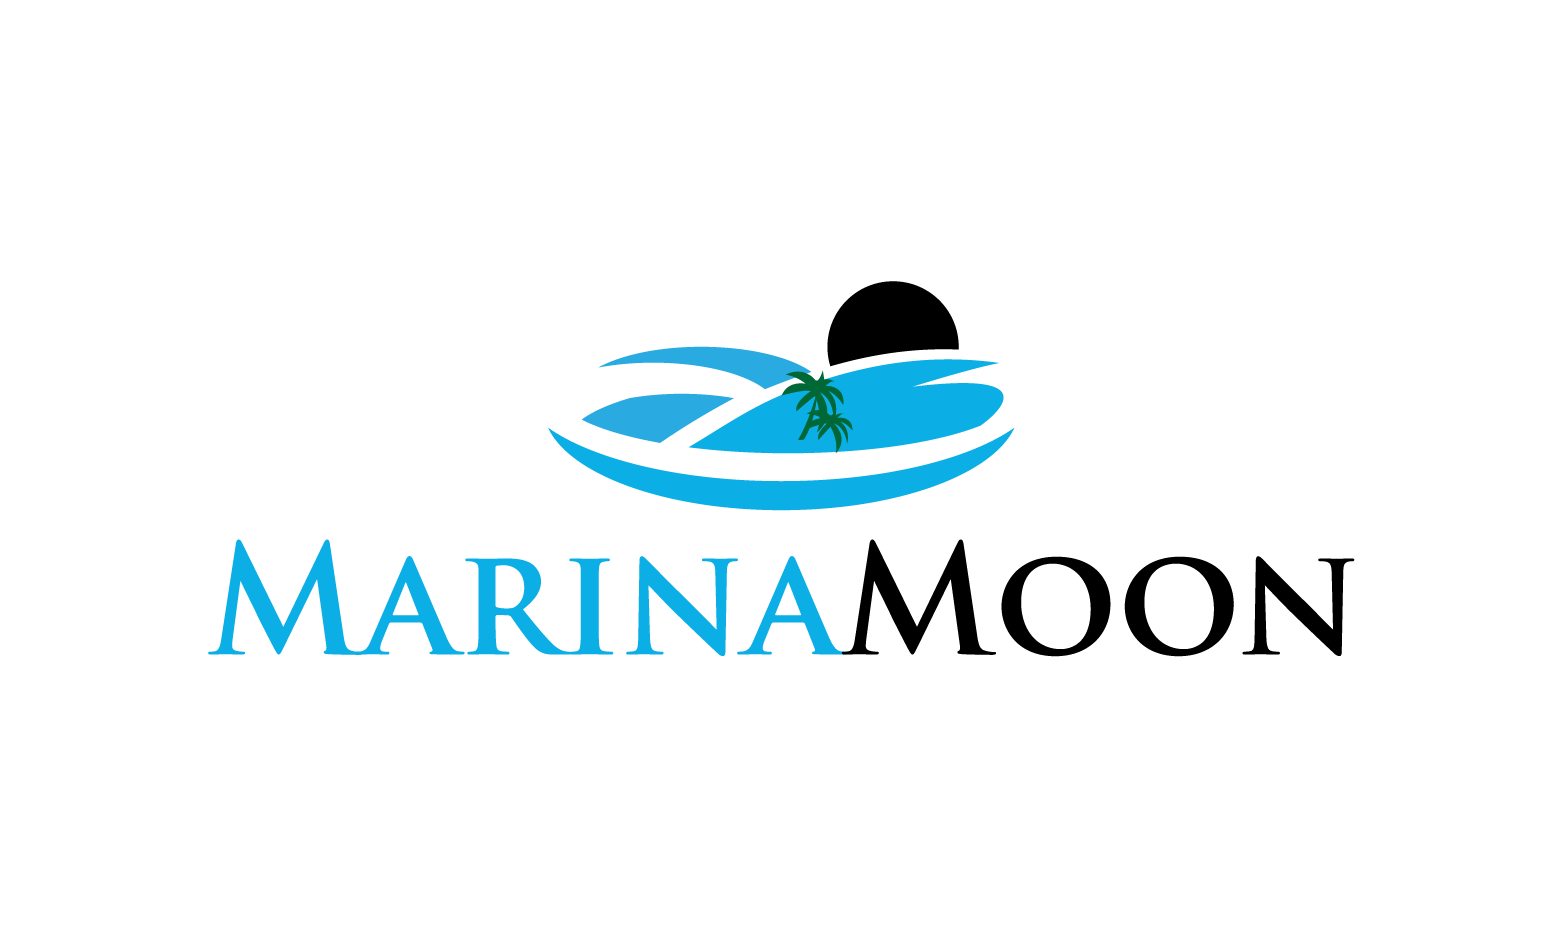 MarinaMoon.com - Creative brandable domain for sale